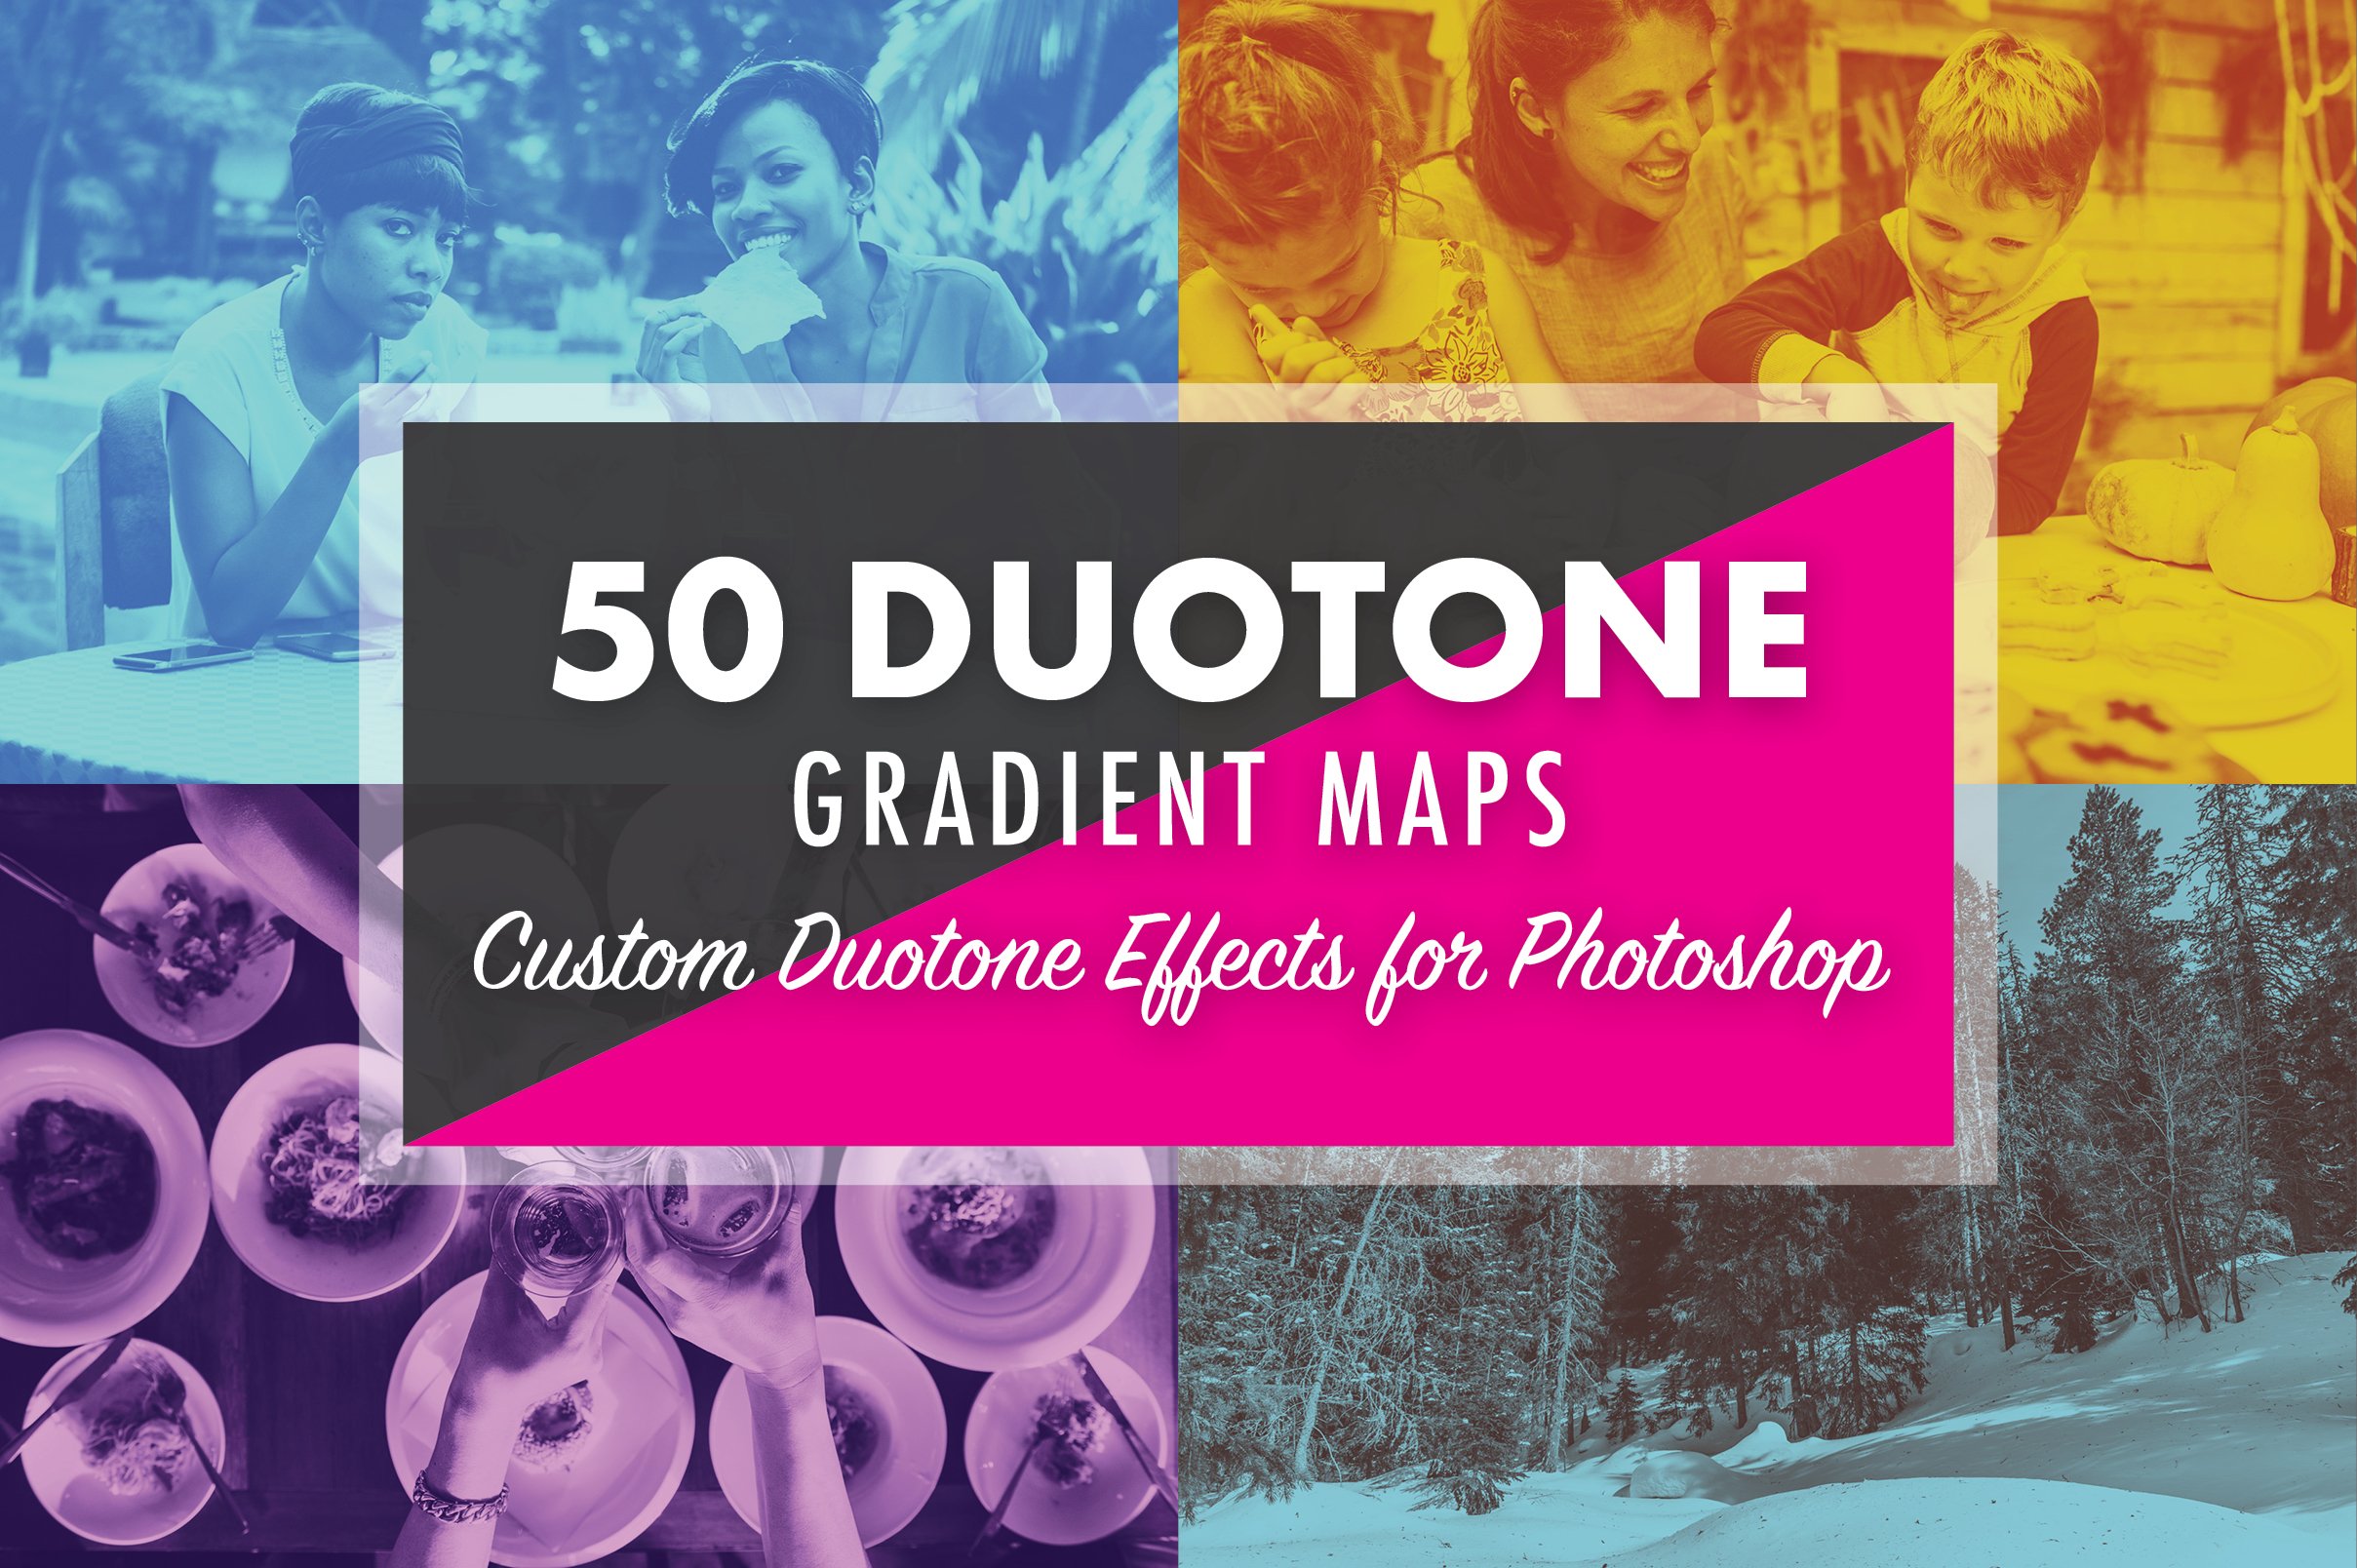 50 Duotone Gradient Mapscover image.